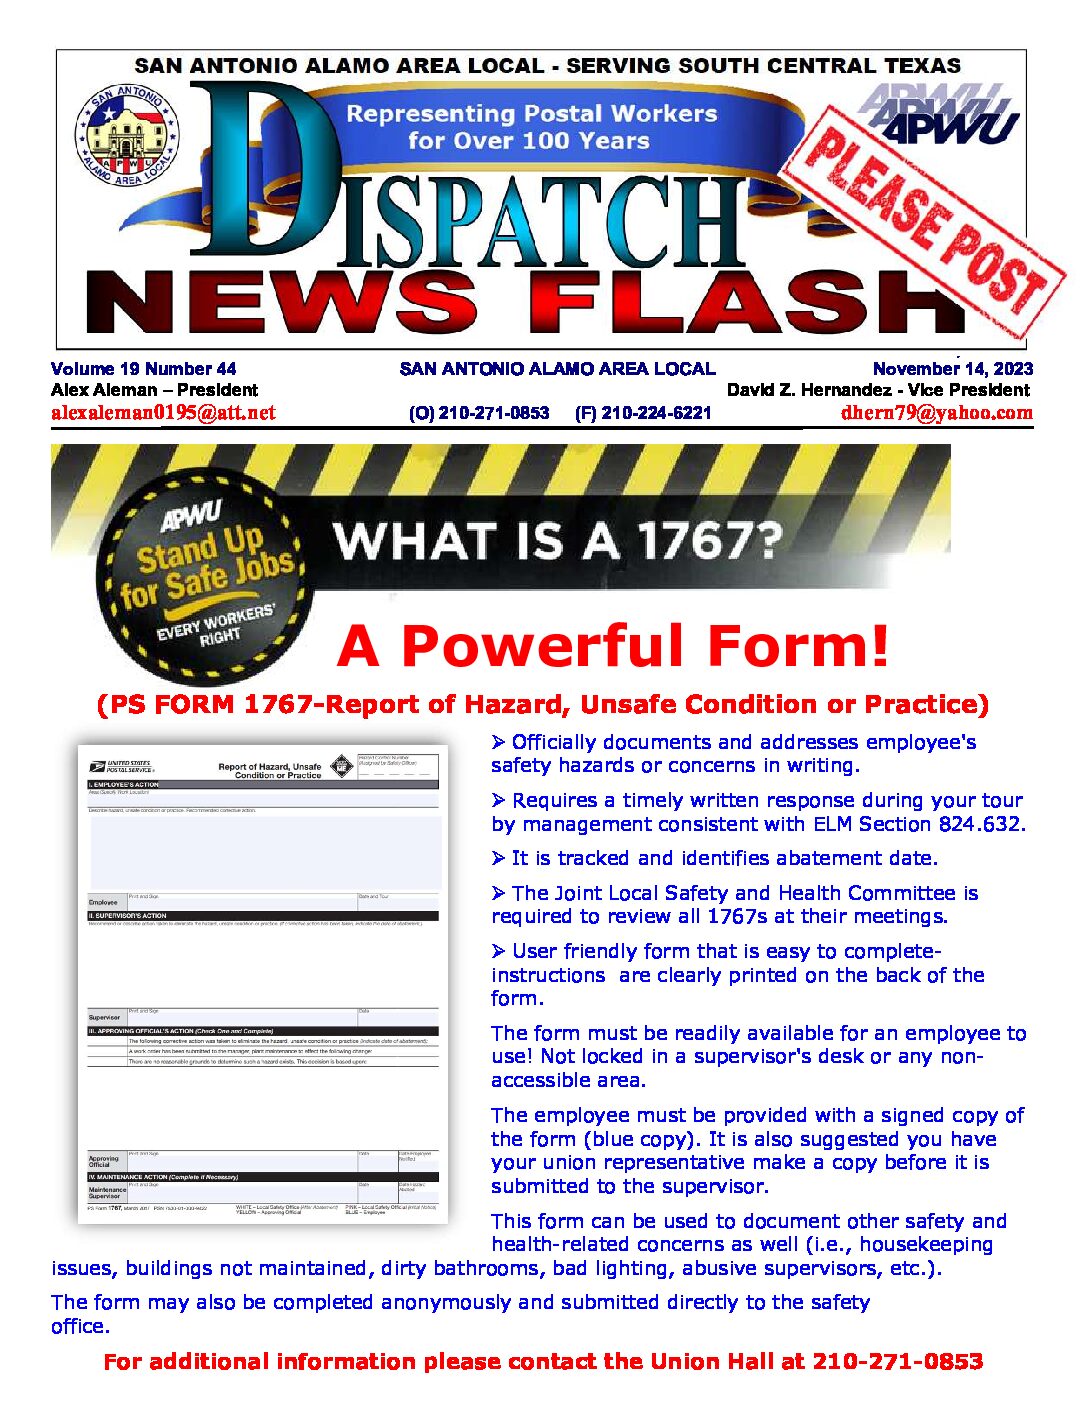 NewsFlash 19-44 Form 1767 – A Powerful Form - 